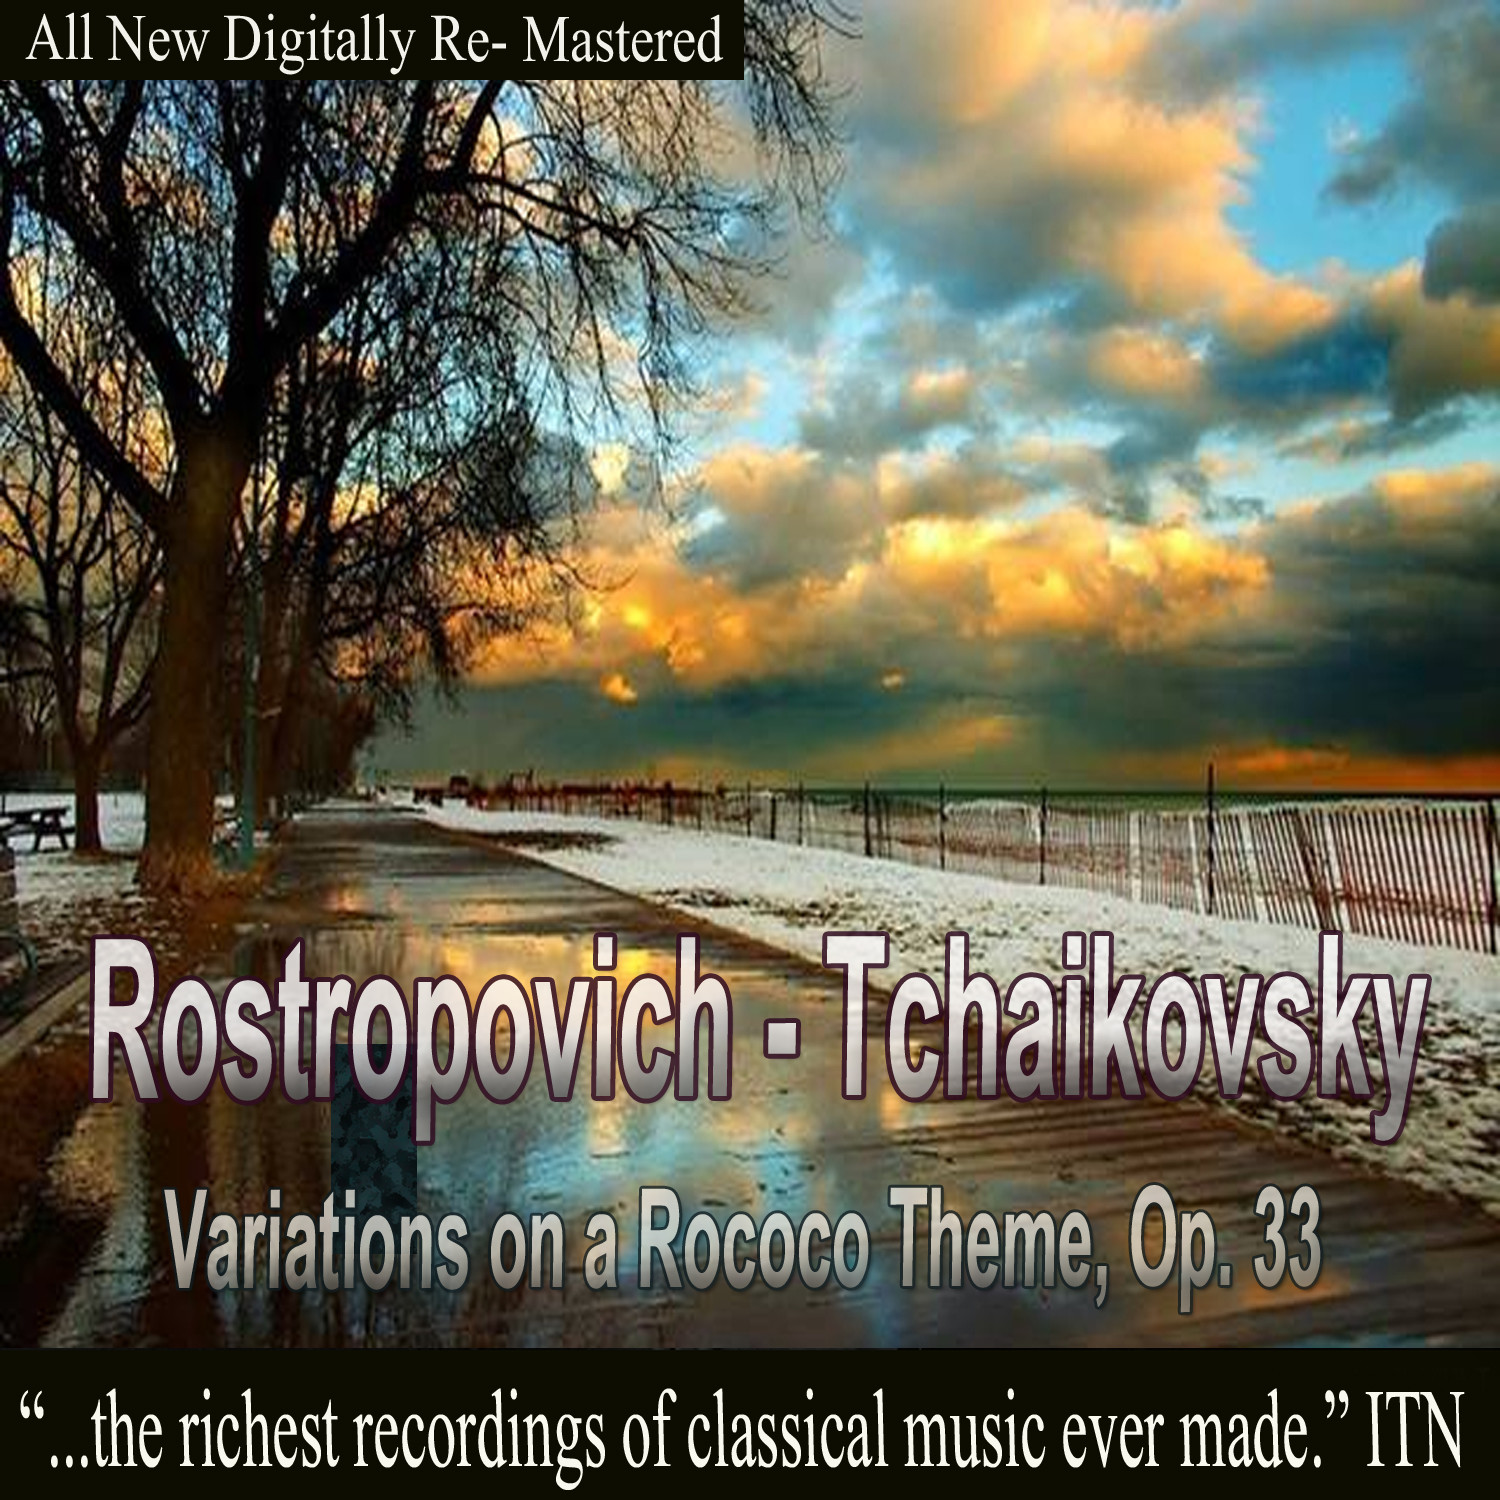 Concerto Rhapsody for Cello and Orchestra, Part 4